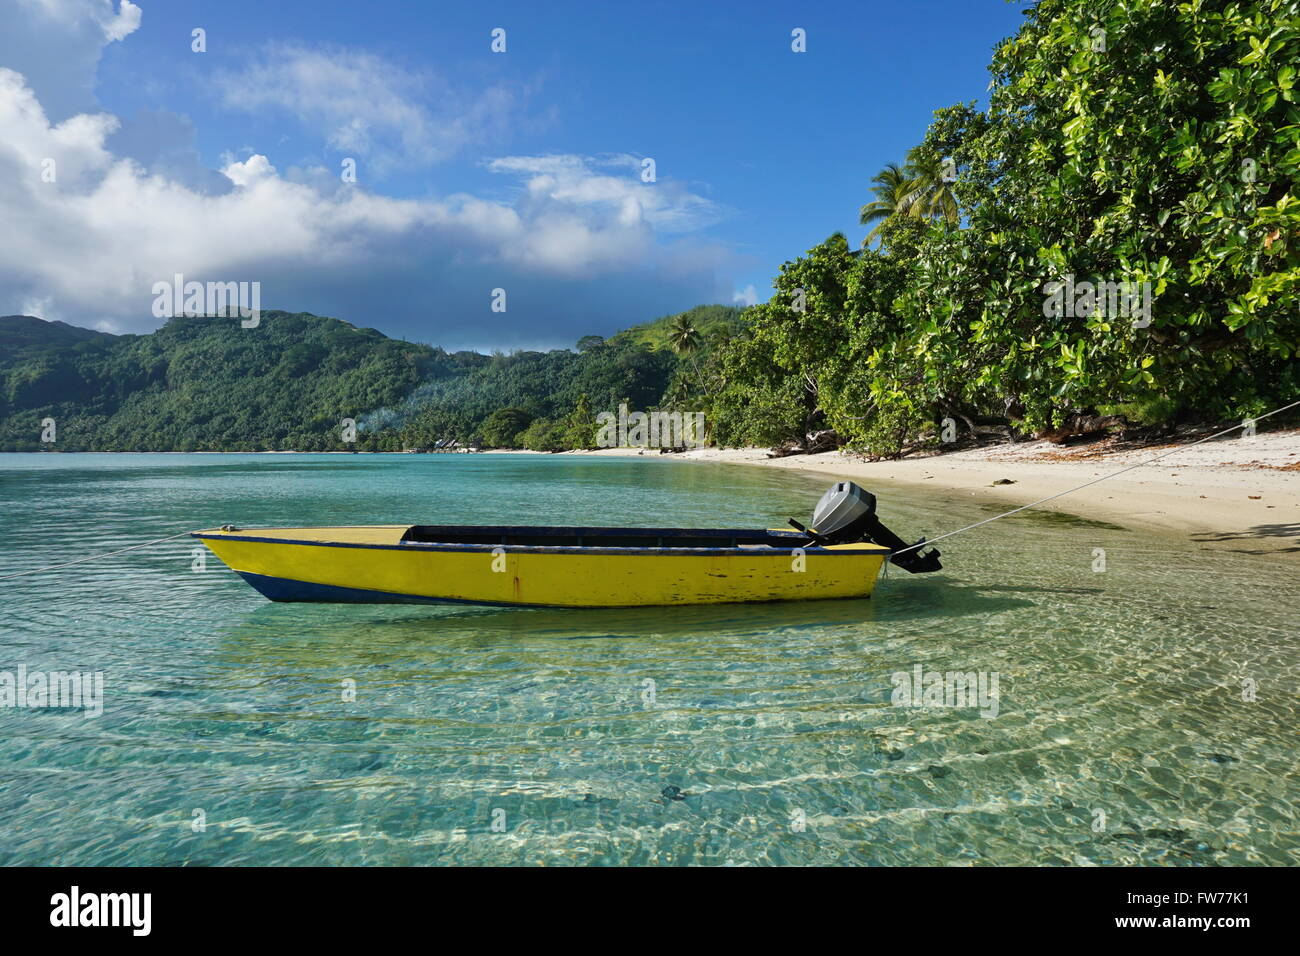 Small motor boat moored on sandy shore with tropical vegetation, Avea bay, Huahine Iti island, Pacific ocean, French Polynesia Stock Photo